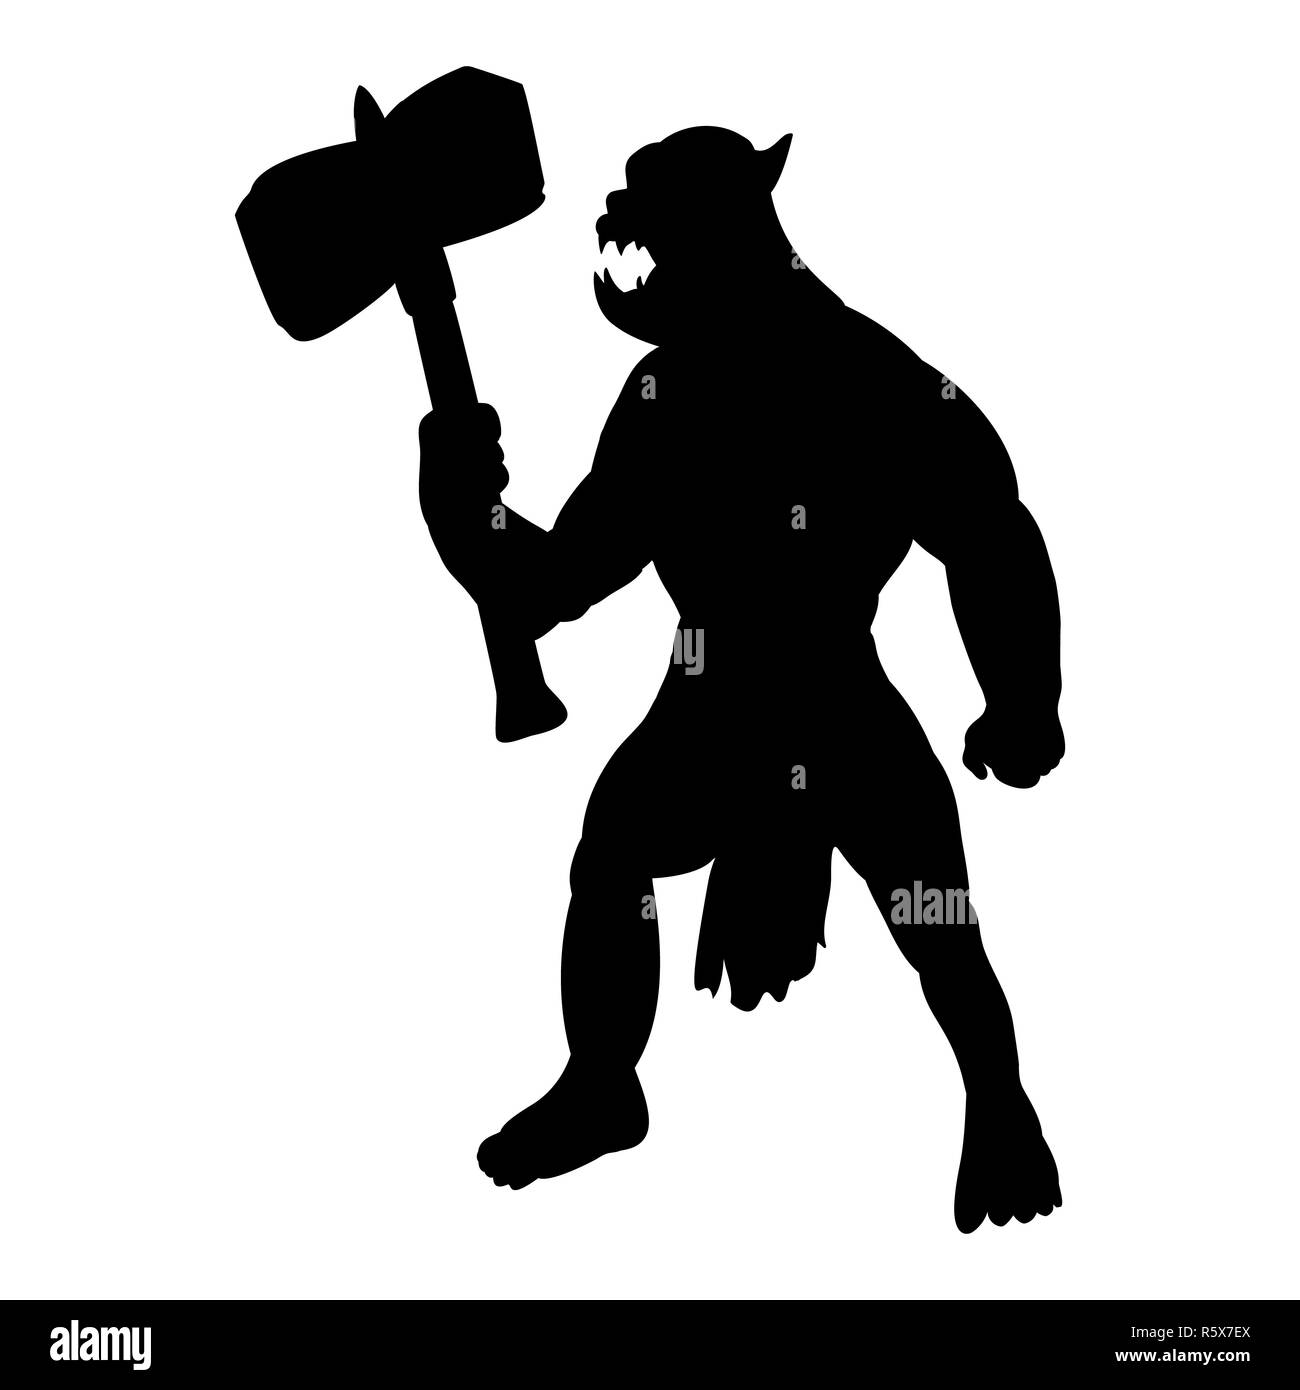 Orc silhouette monster villain fantasy Stock Photo